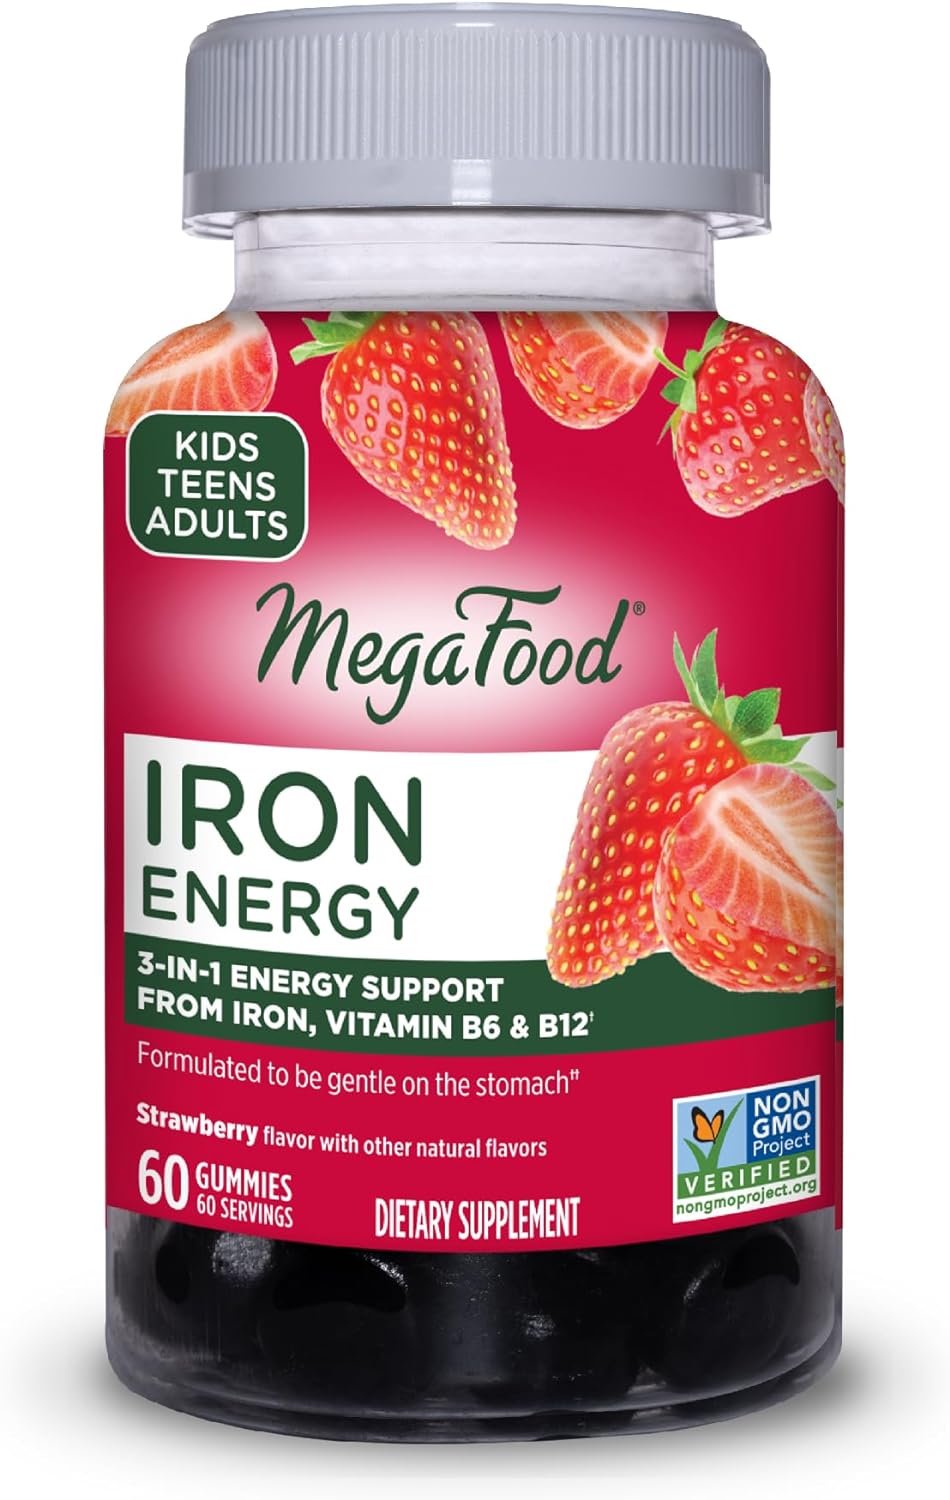 MegaFood Iron Energy Gummies - Vegan & Gluten-Free Iron Supplement for Women, Men, Teens & Kids with Vitamin B12 & B6, from The Makers of Blood Builder Iron Supplement, Strawberry Flavor - 60 Gummies